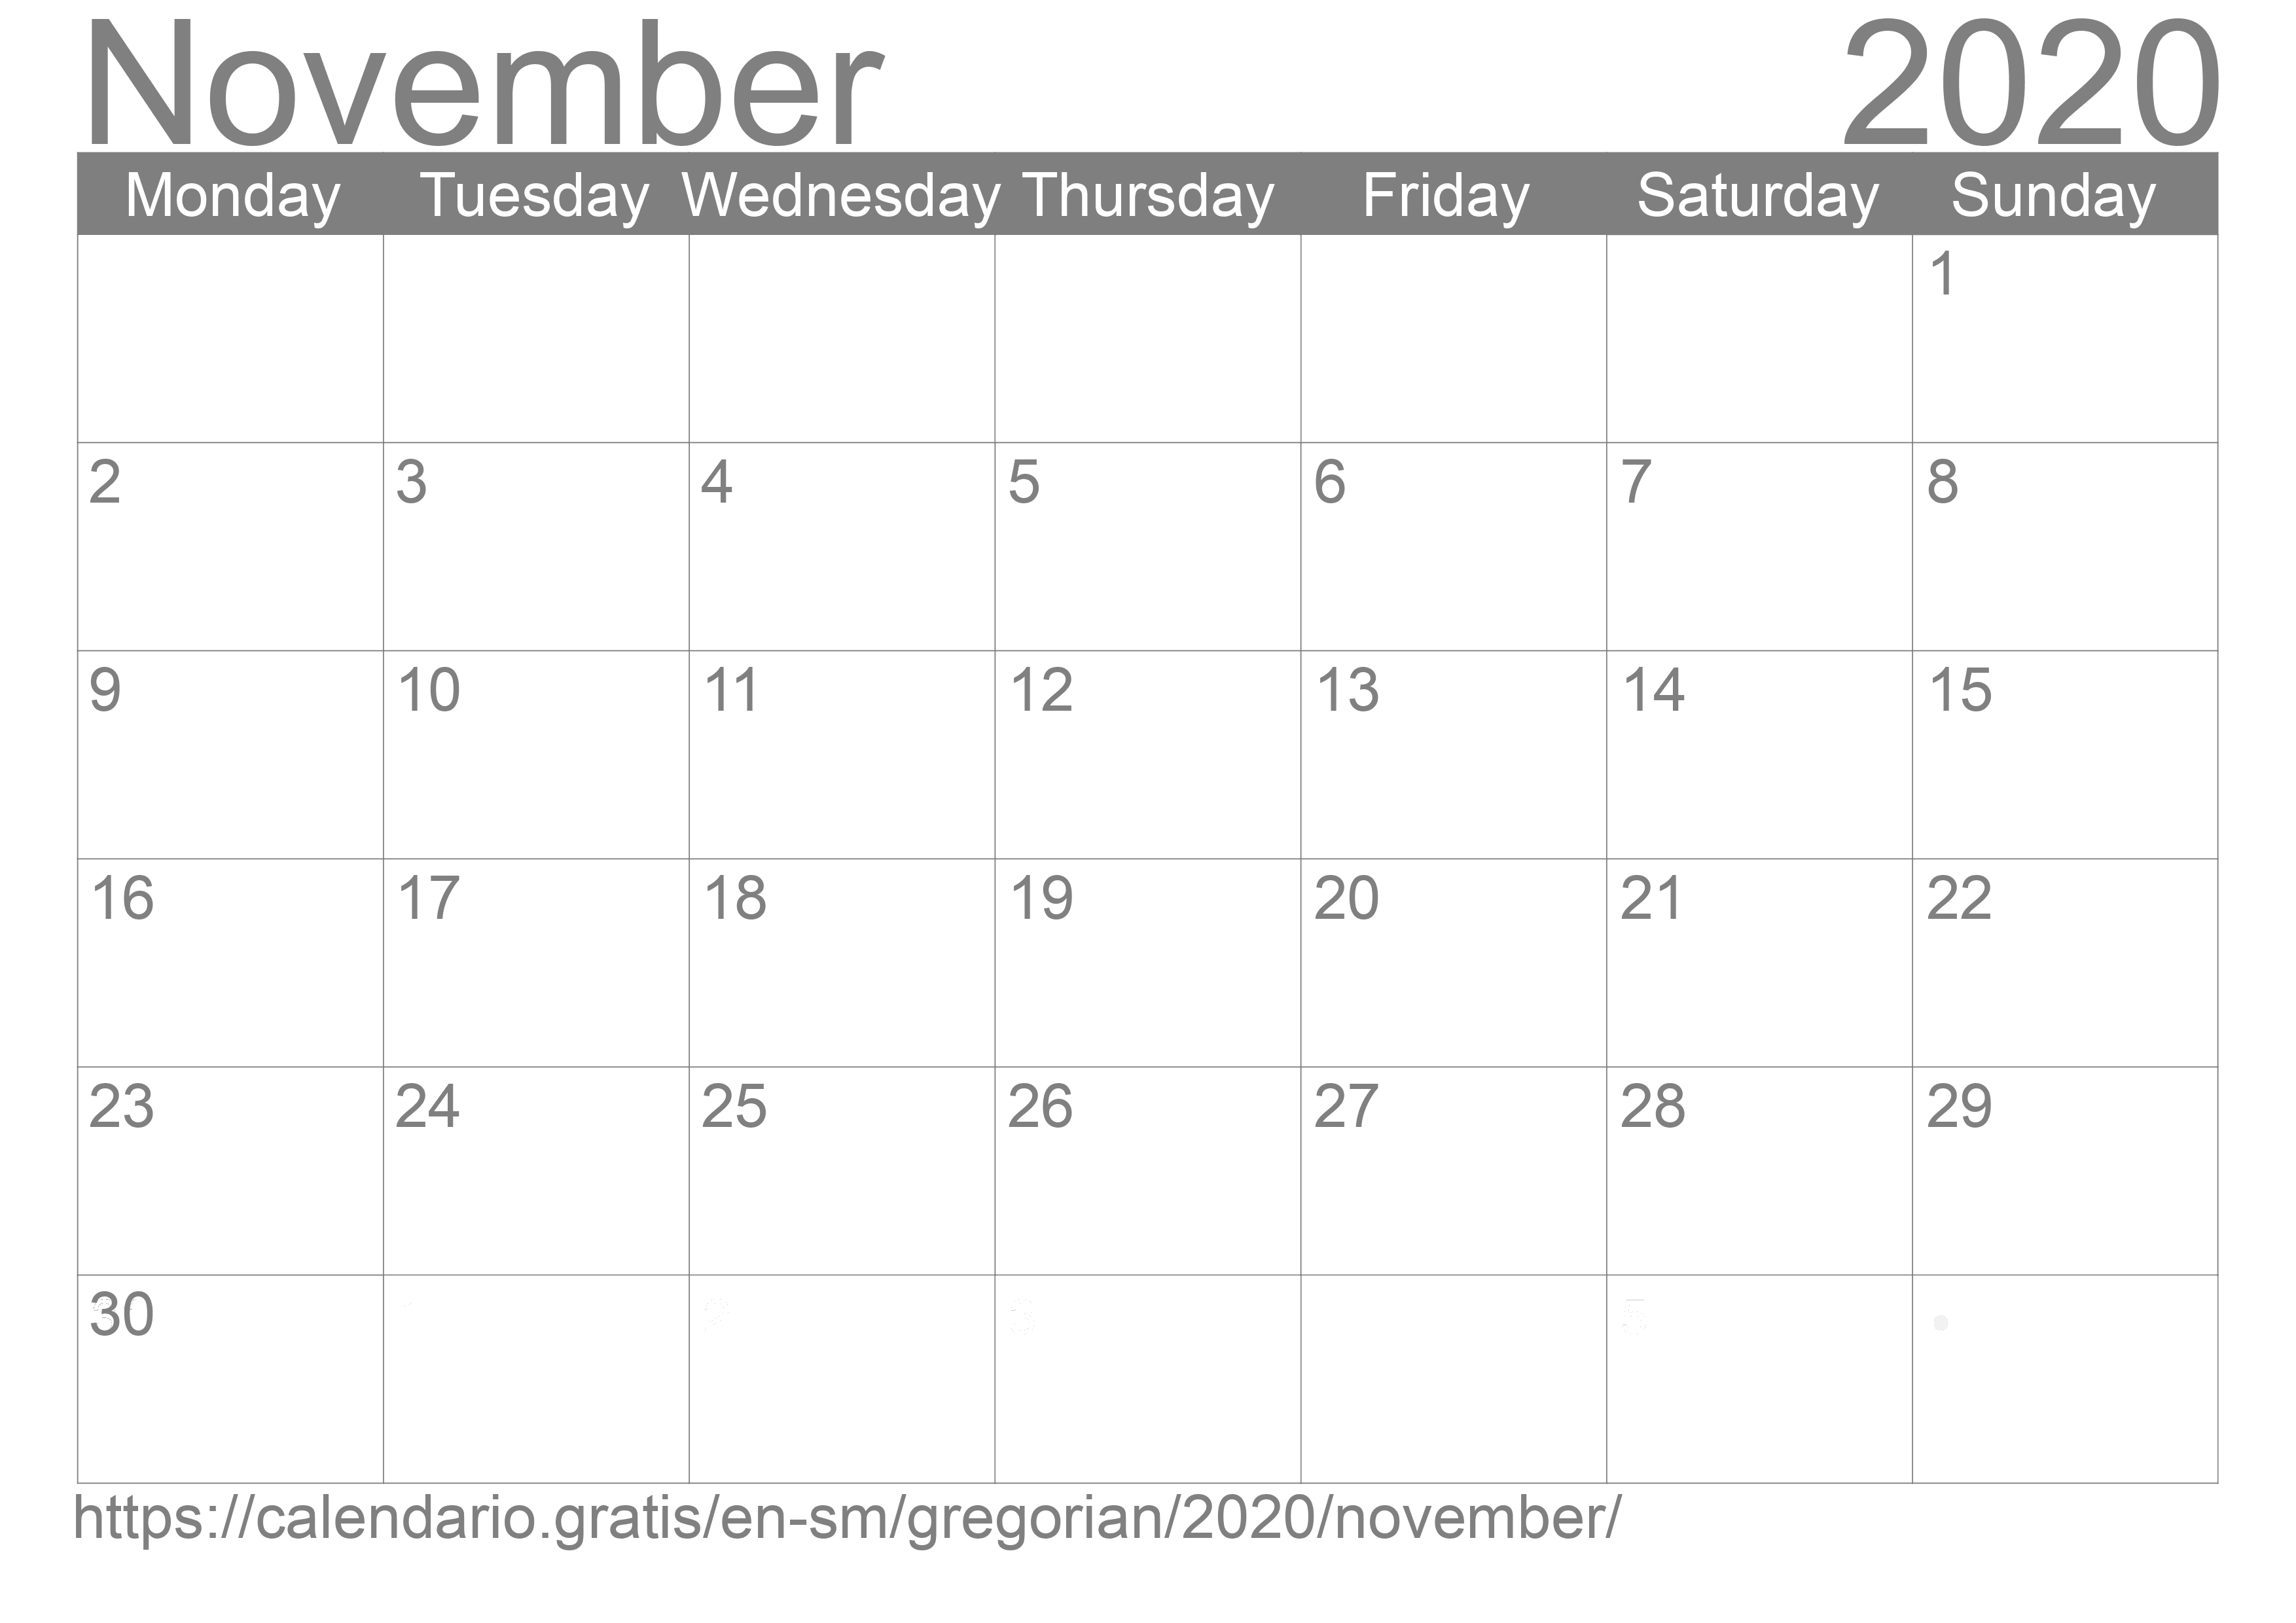 Calendar November 2020 to print